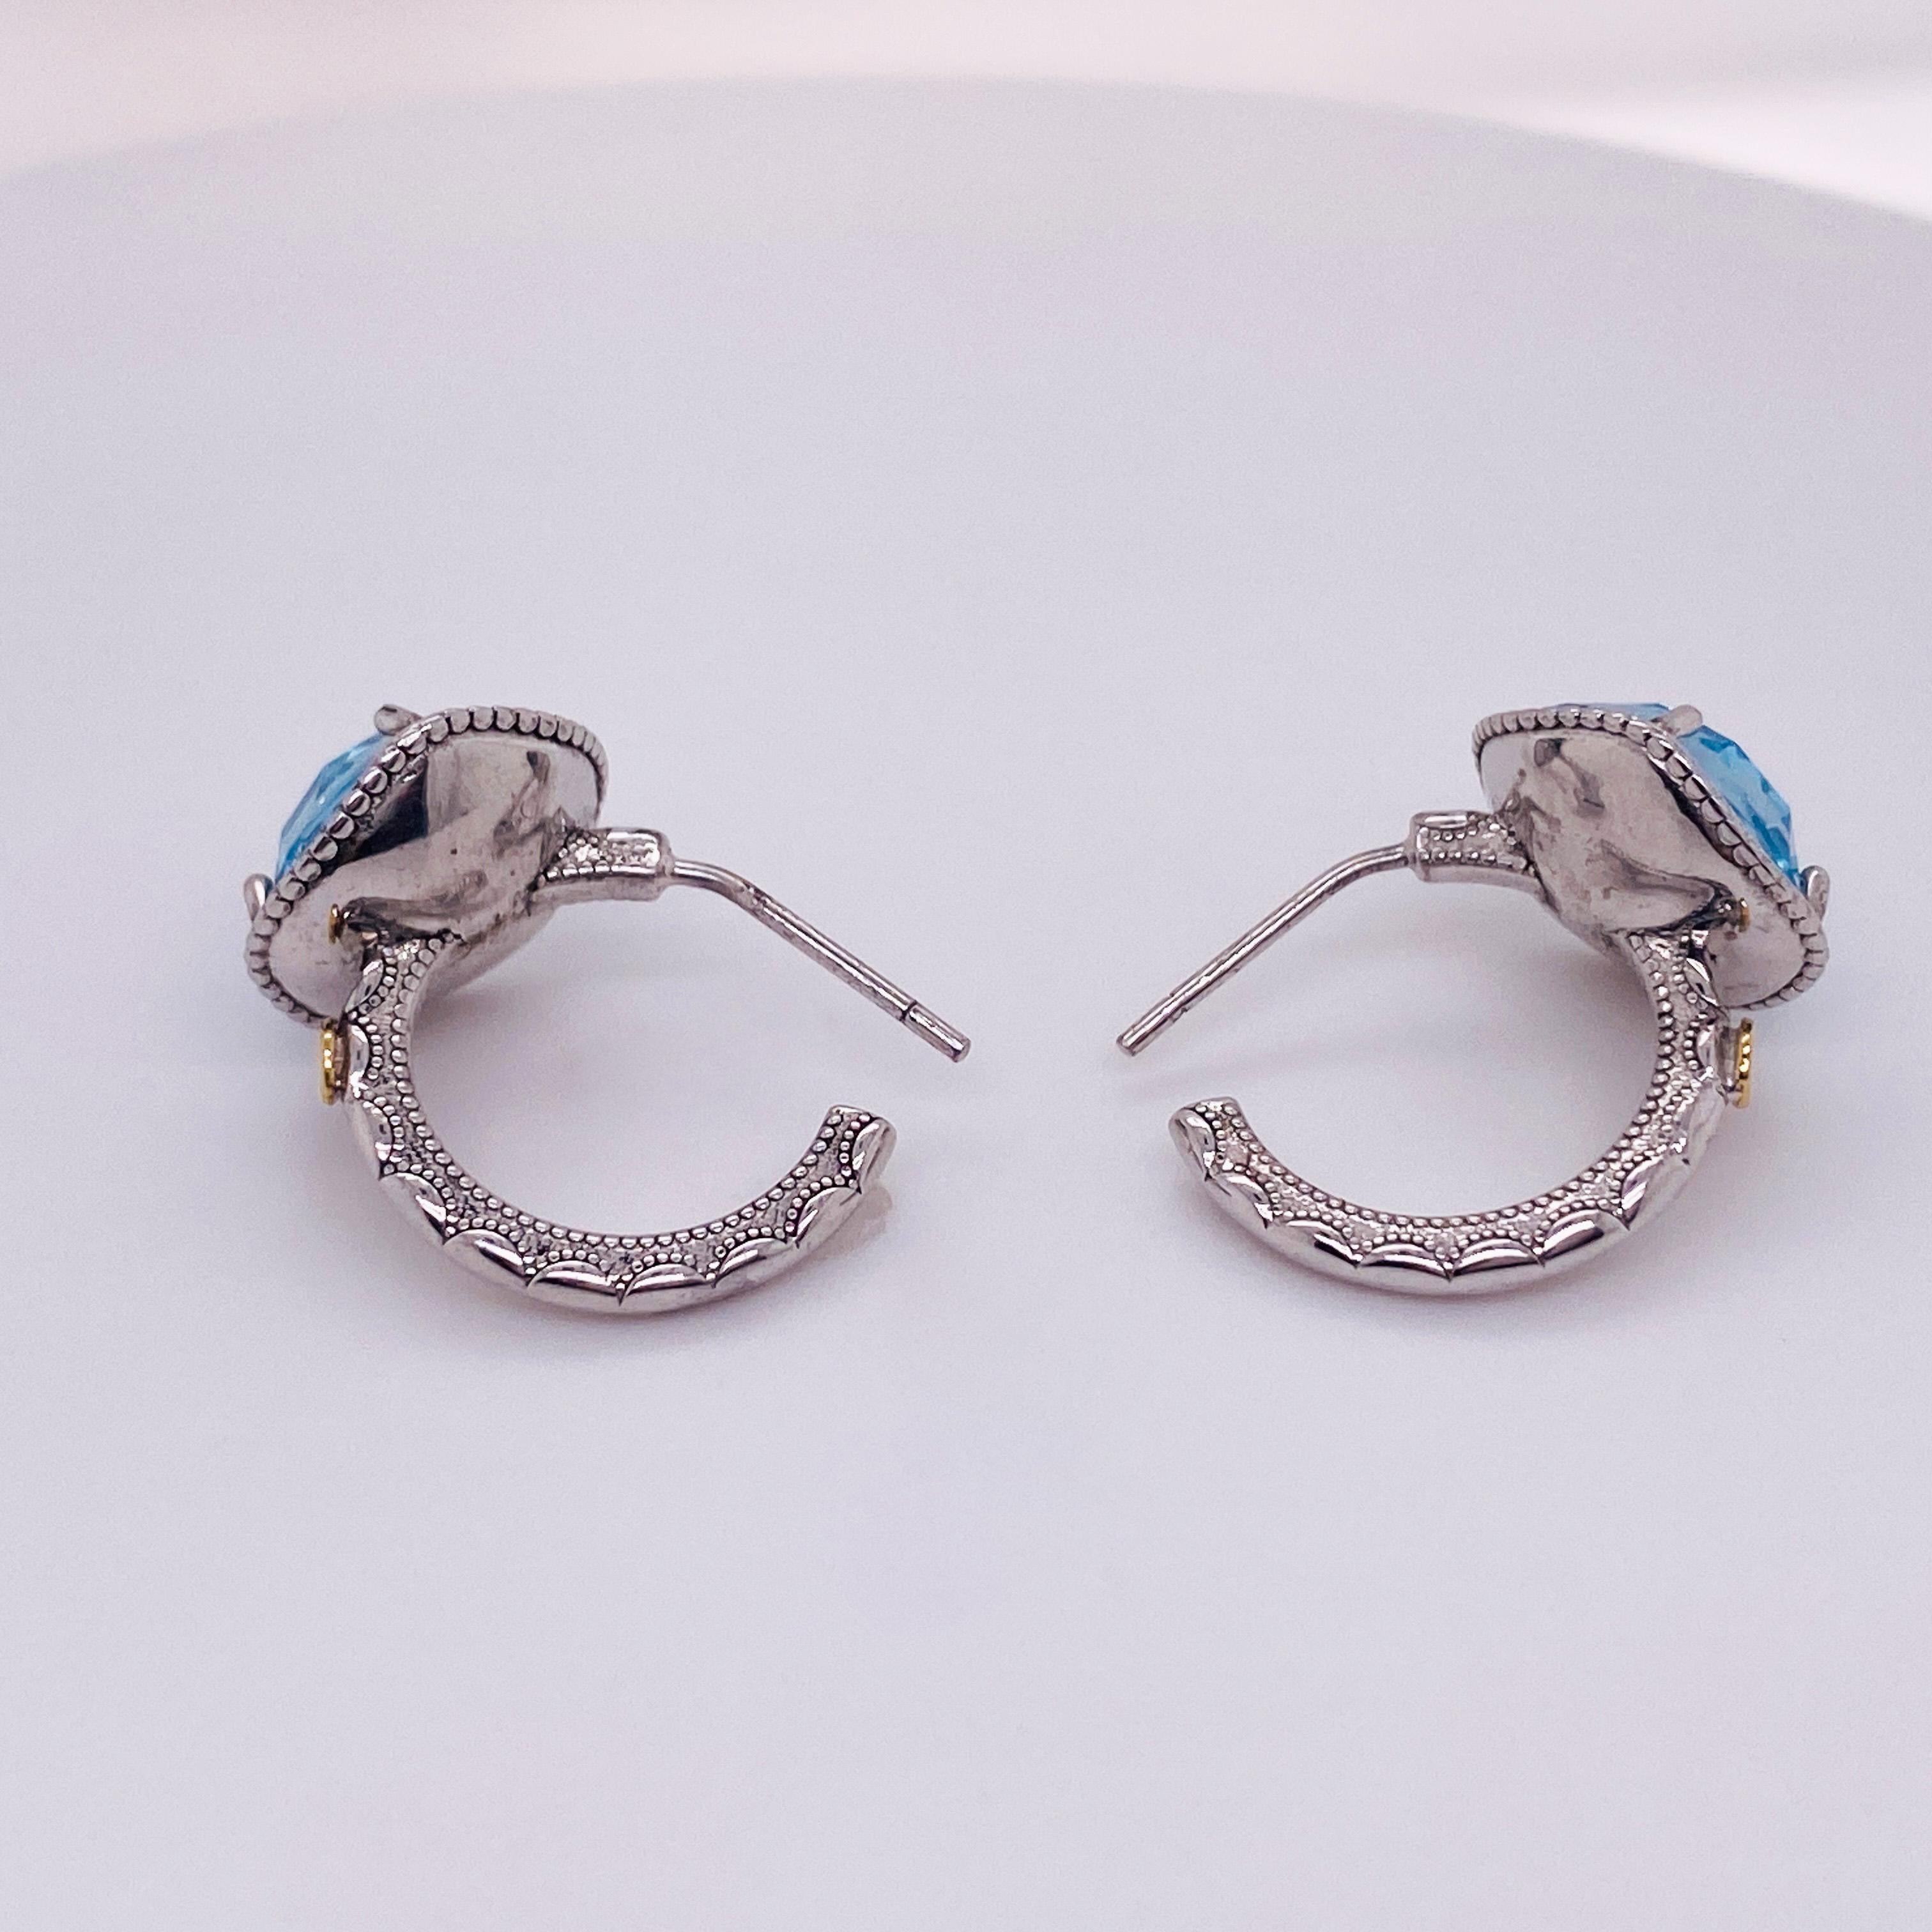 tacori london blue topaz earrings